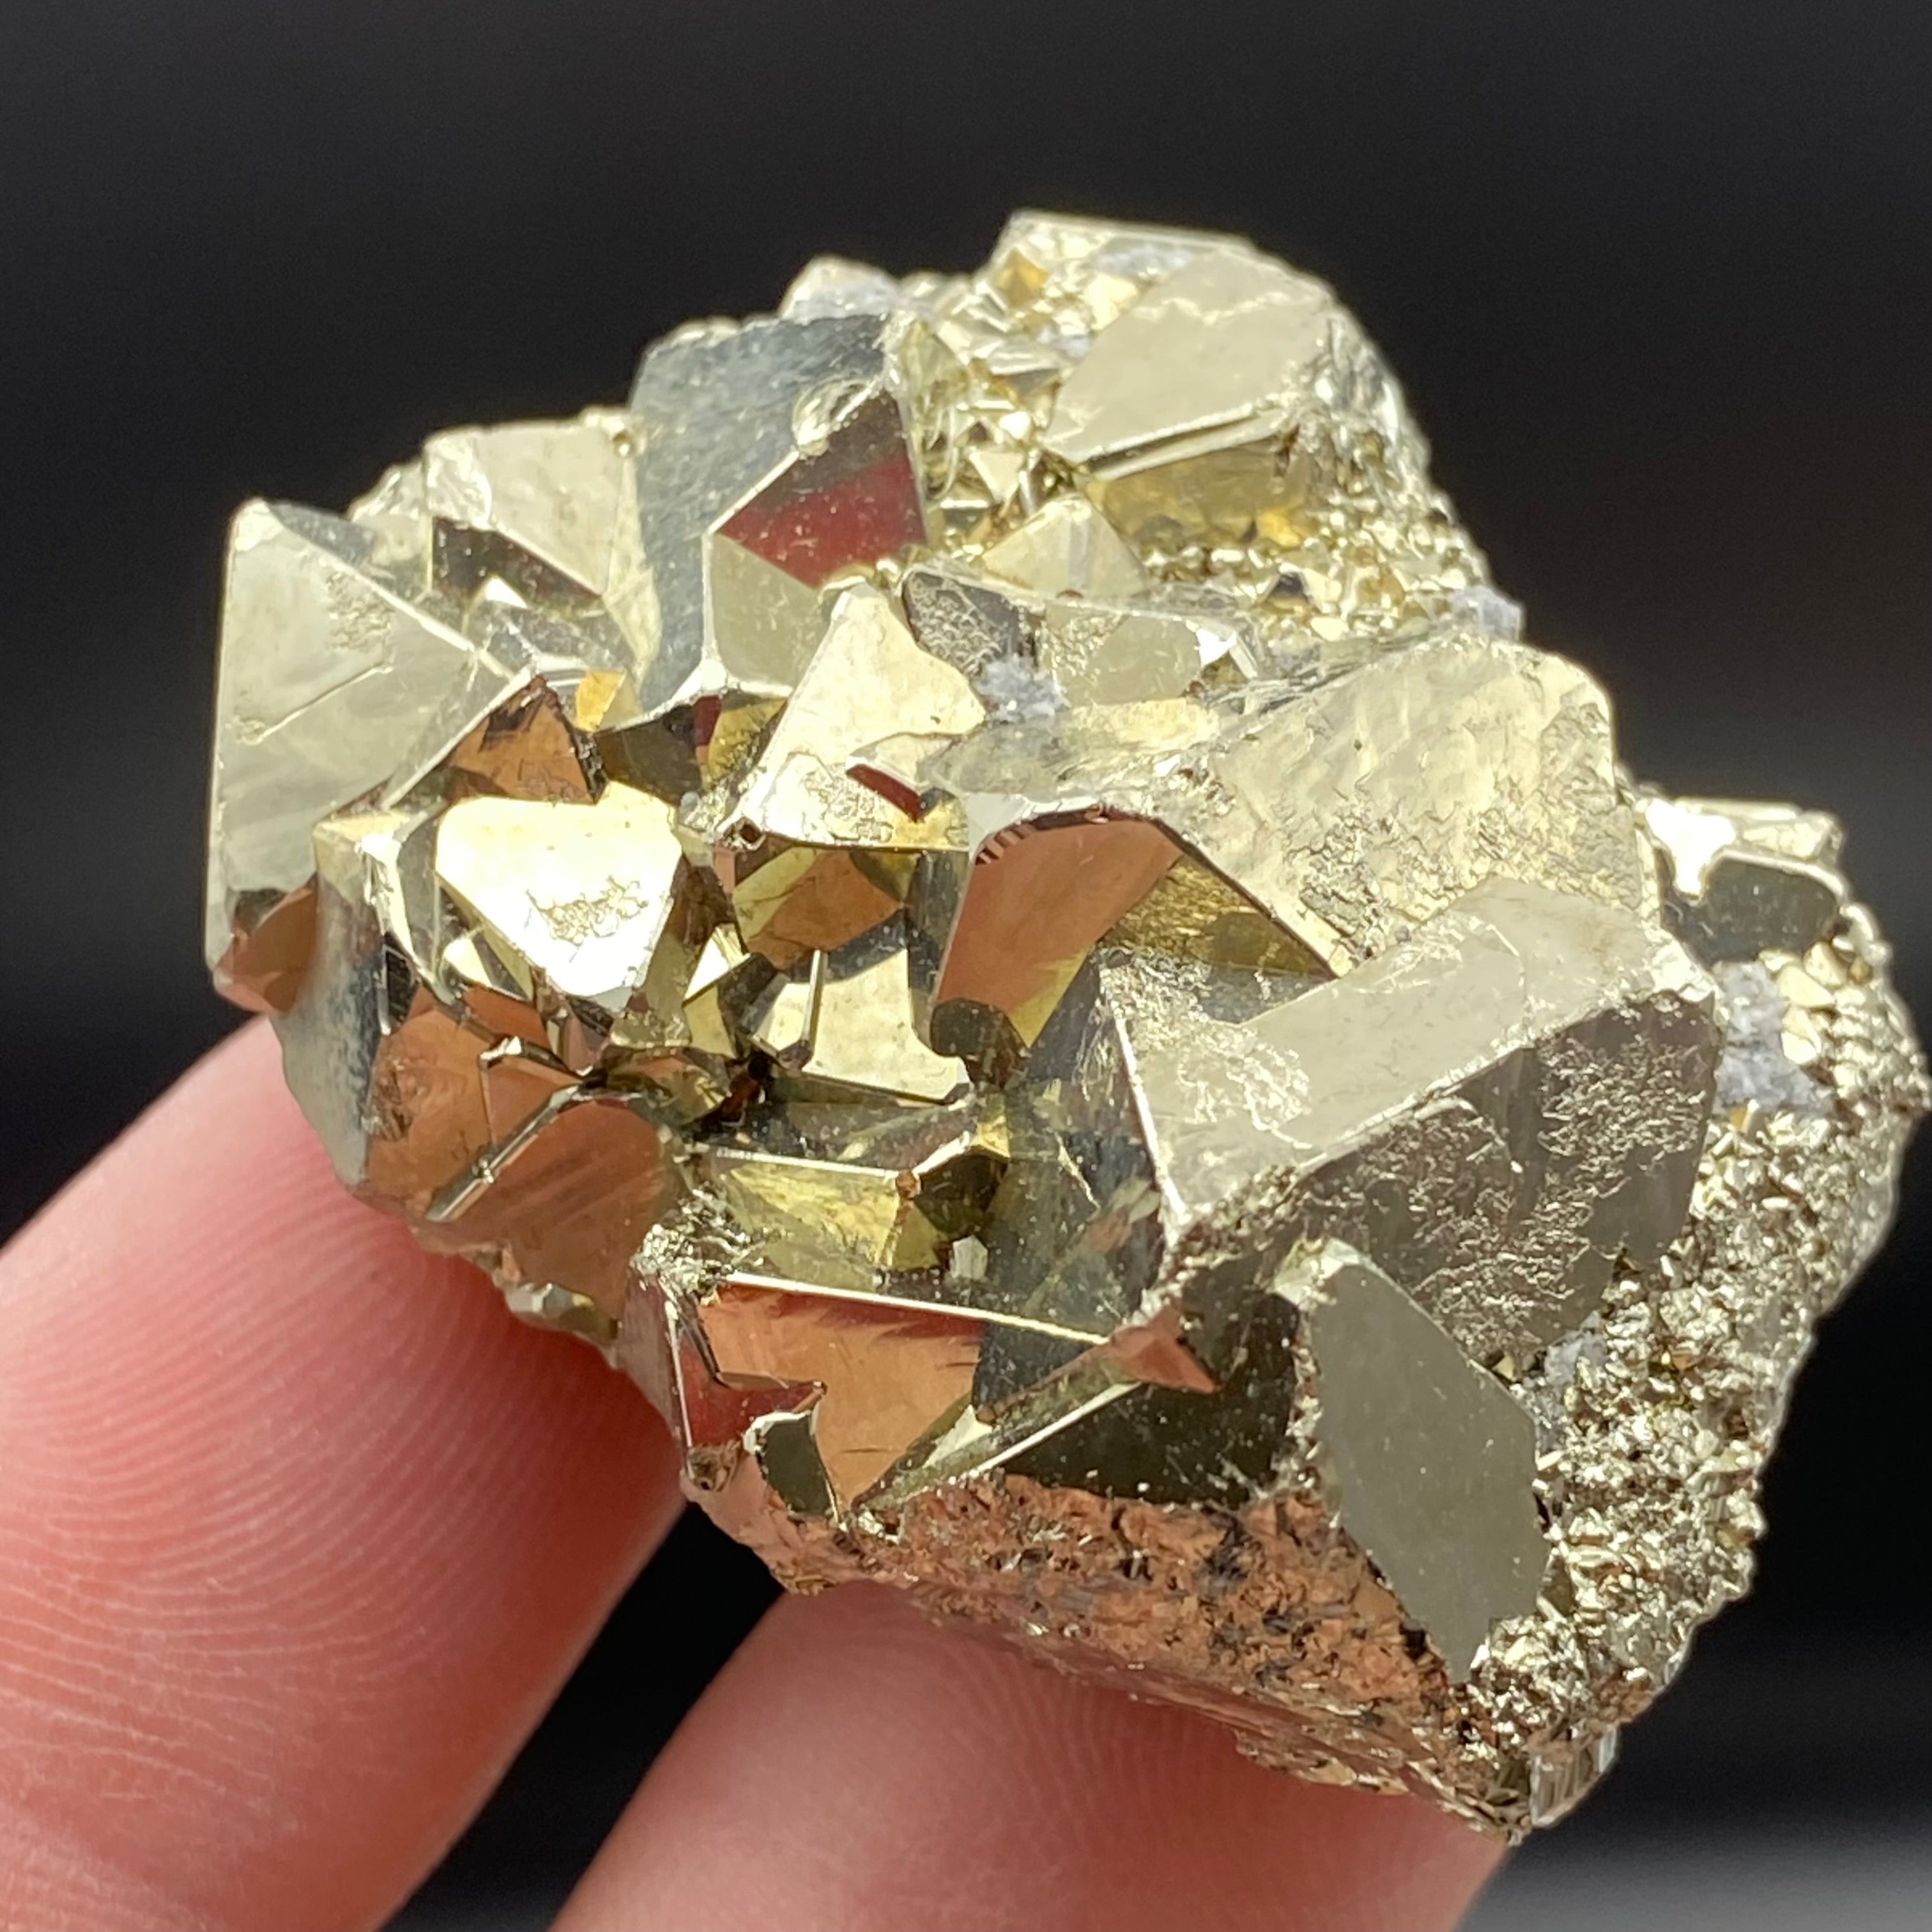 Peruvian Pyrite Crystal - 100